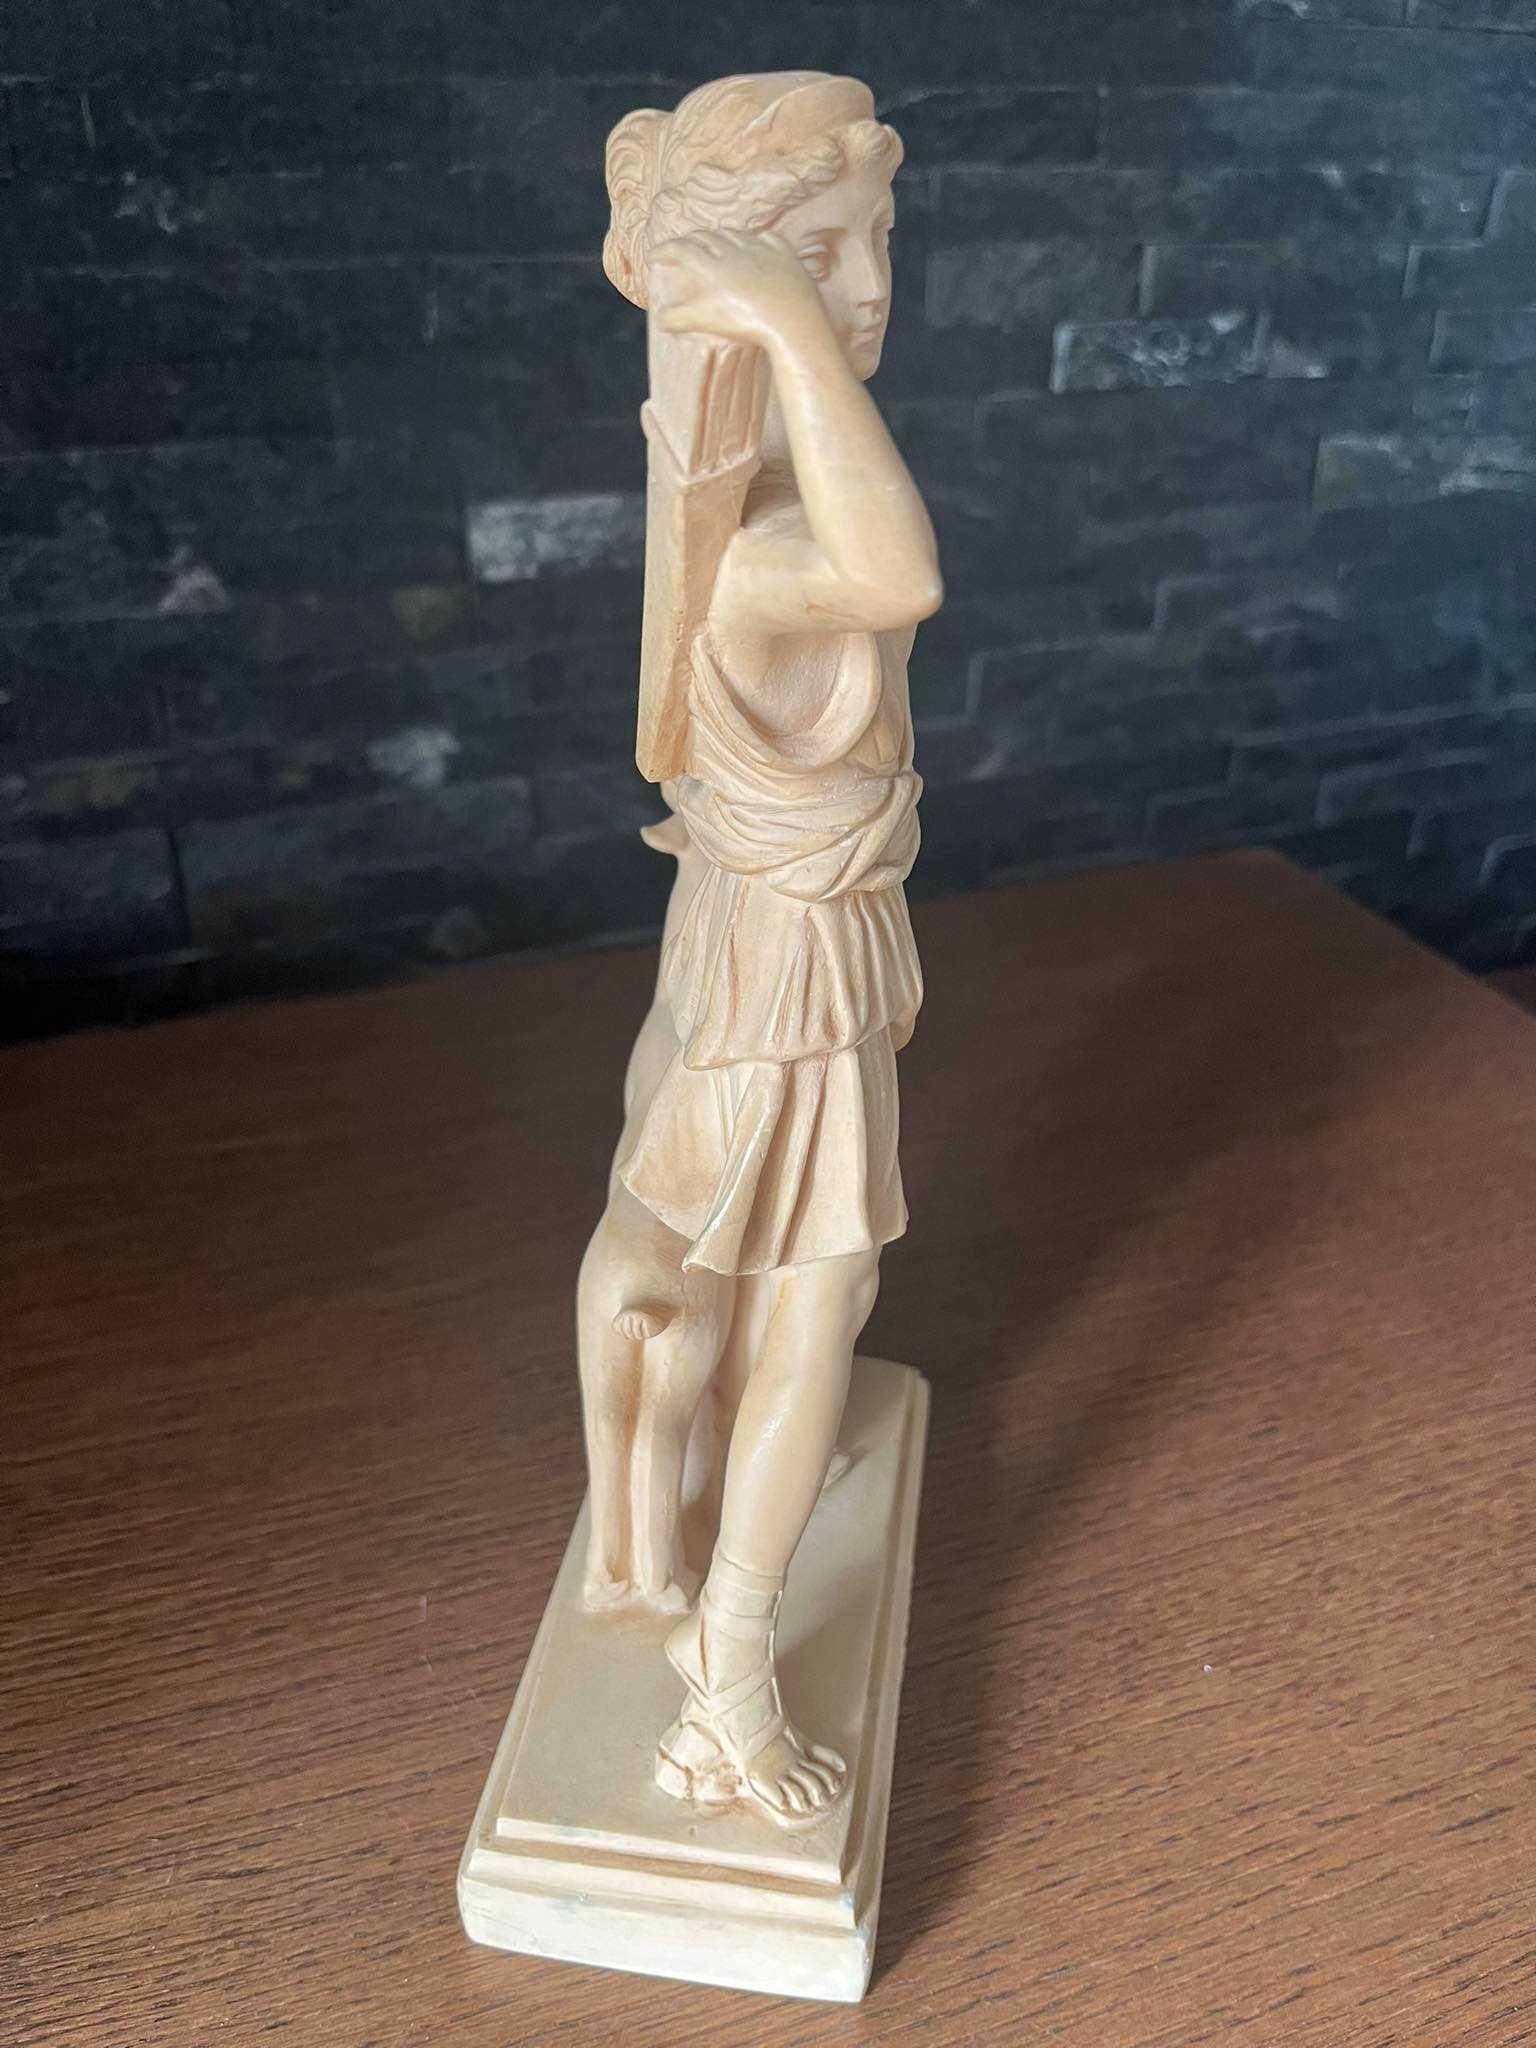 Grecki Bóg bóstwo greckie figurka alabaster 26 cm